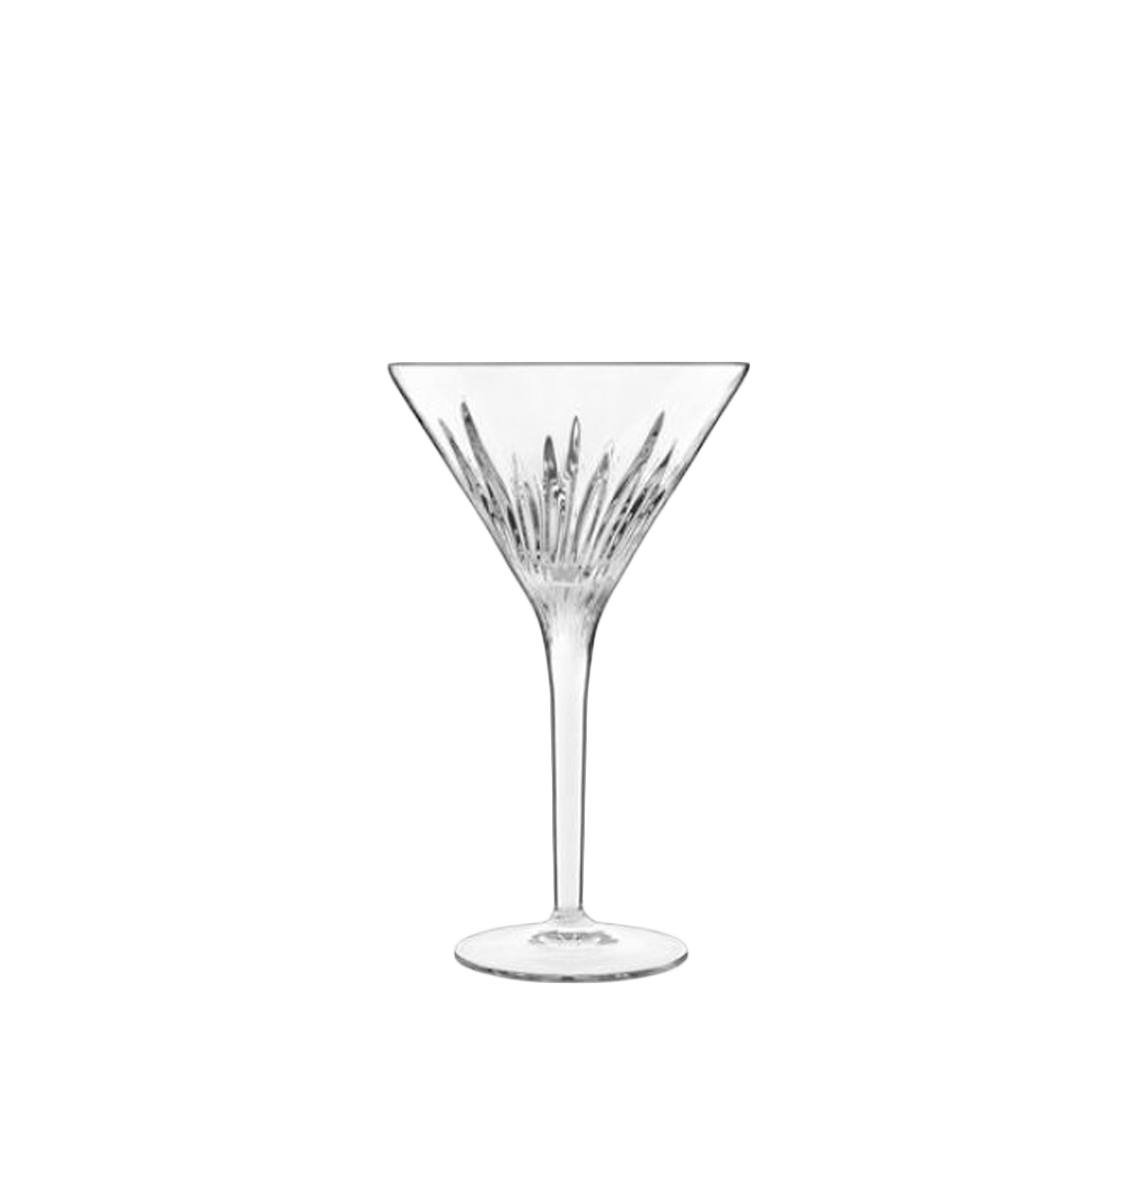 Garn. čaša za martini Mixology 215ml 6/1 Bormioli